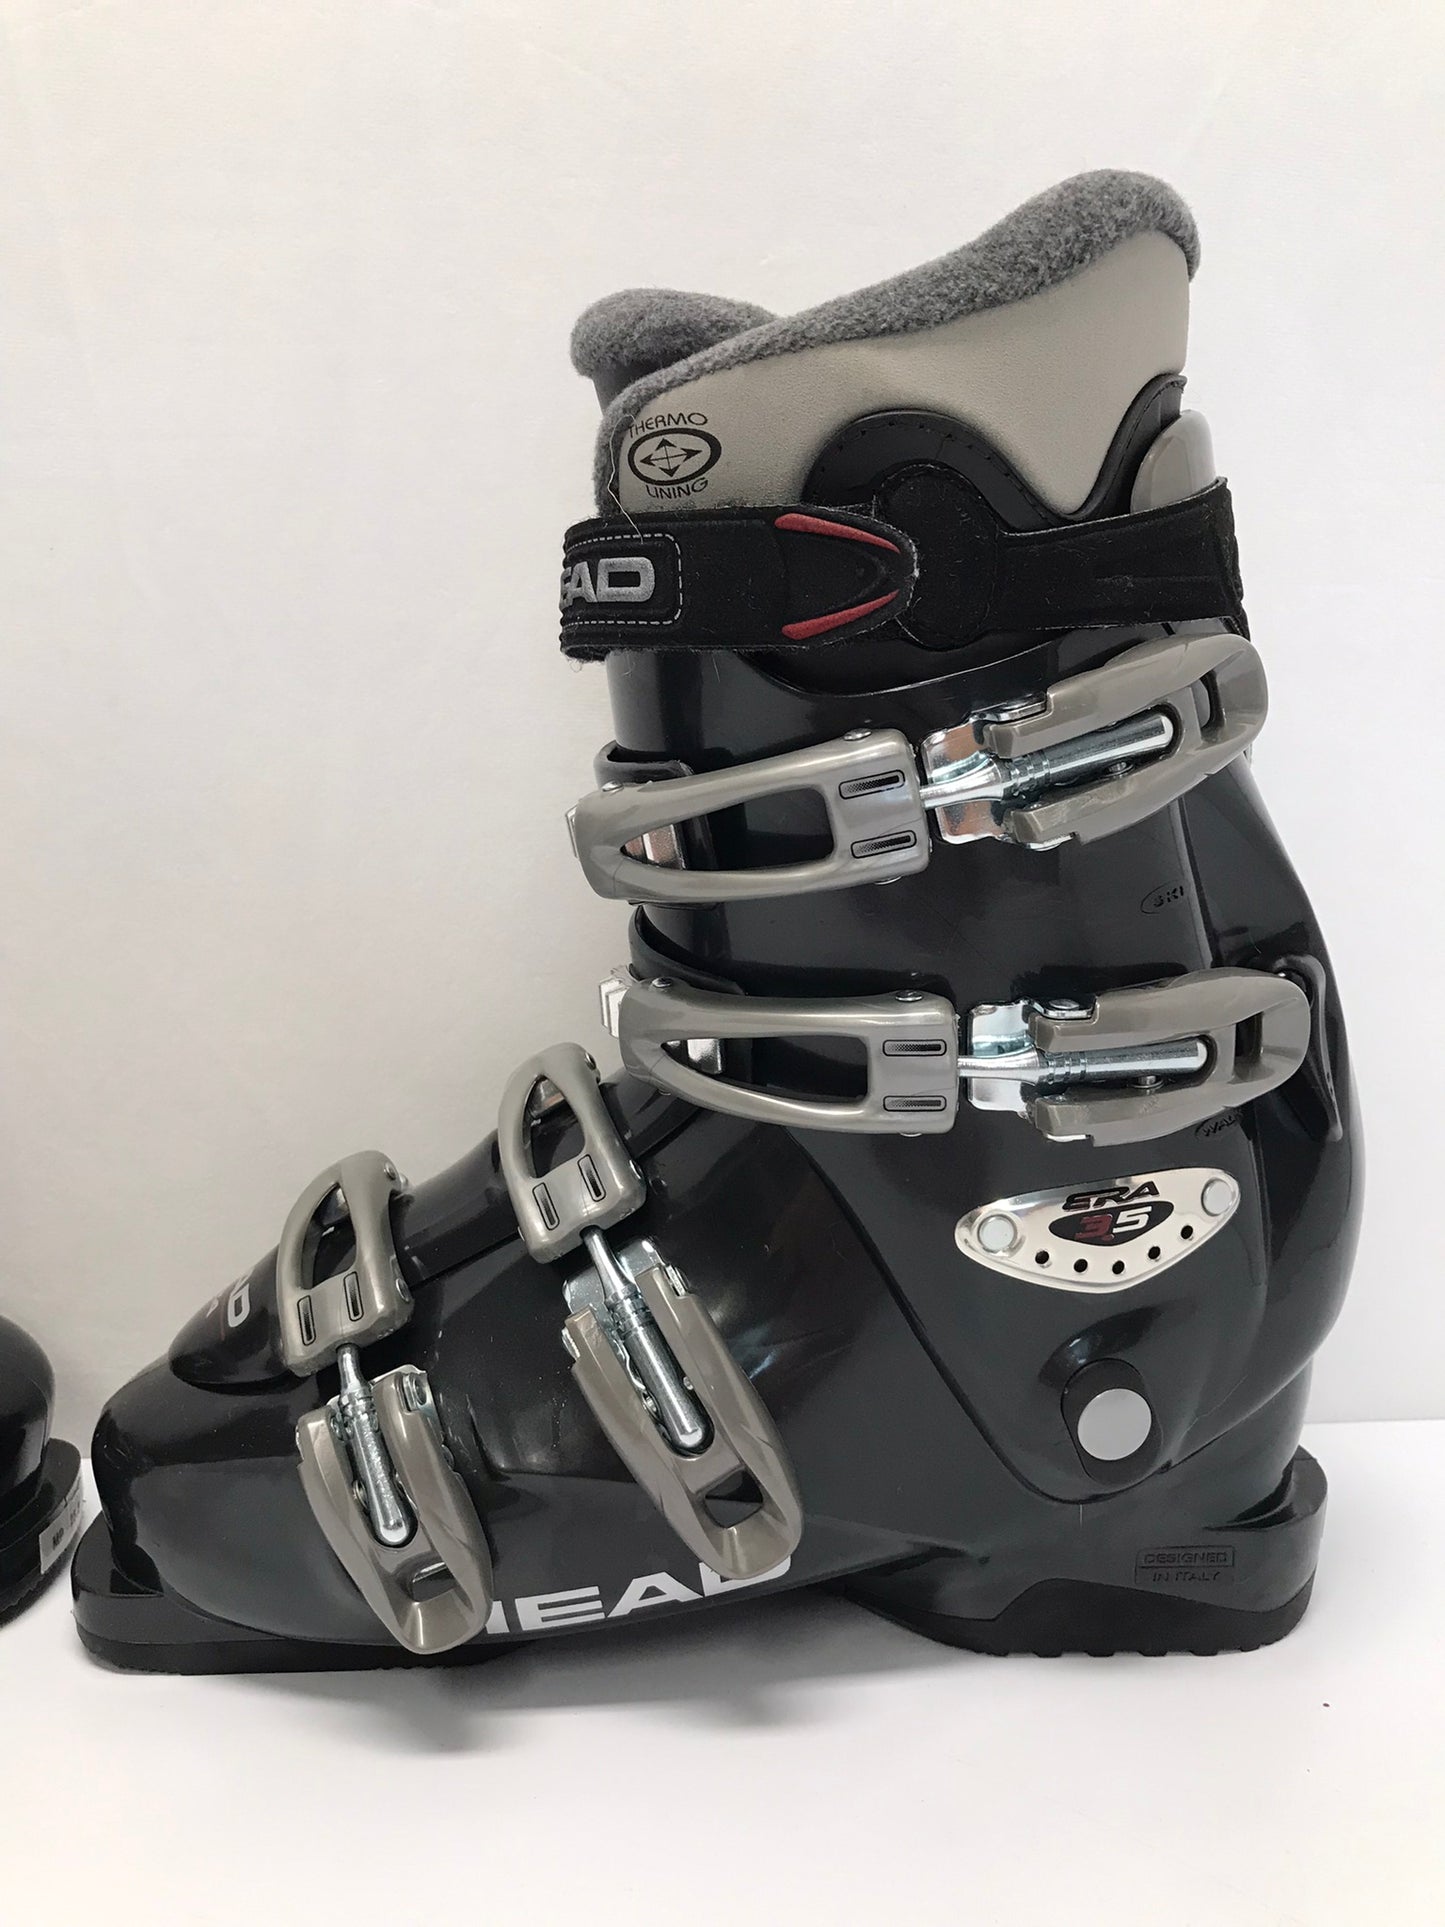 Ski Boots Mondo Size 25.5 Men's Size 7.5 Ladies Size 8.5 292 mm Head Black Grey NEW Demo Model